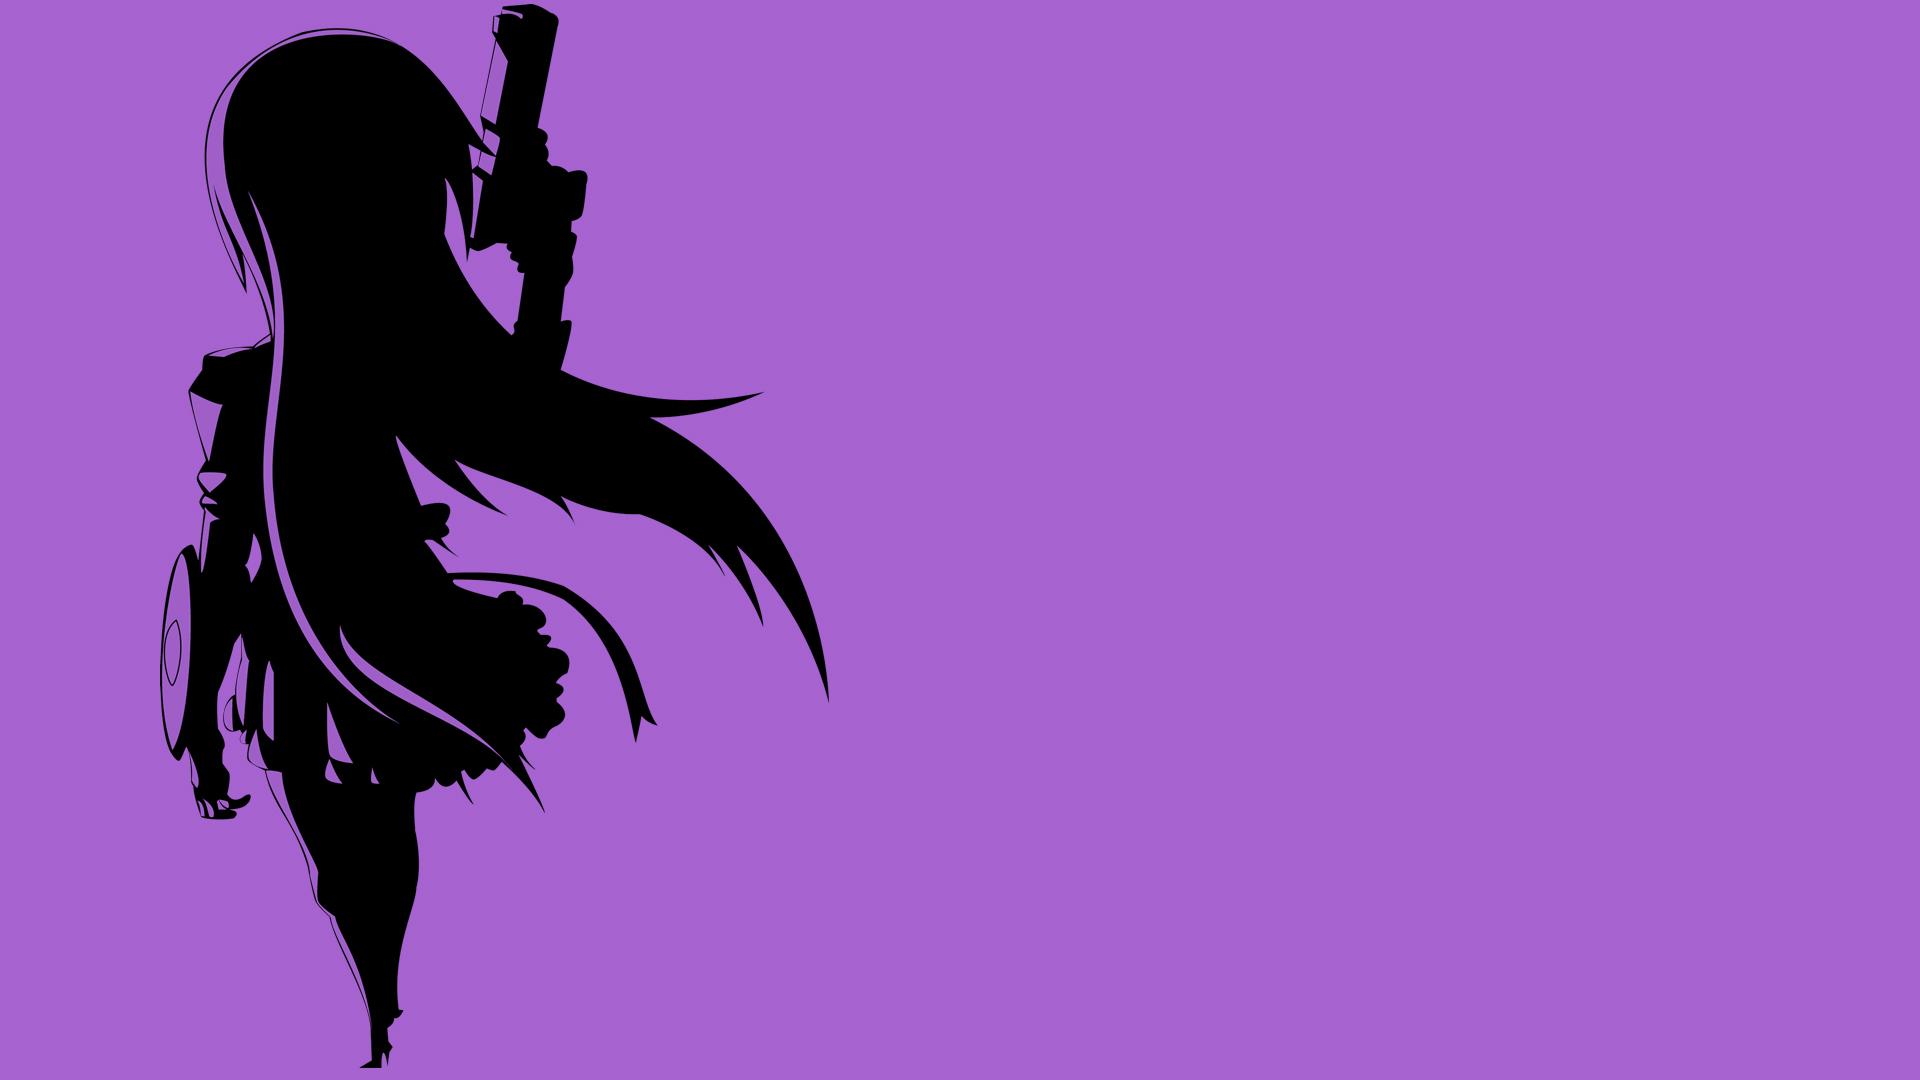 theme anime: Purple Anime Background 1920x1080